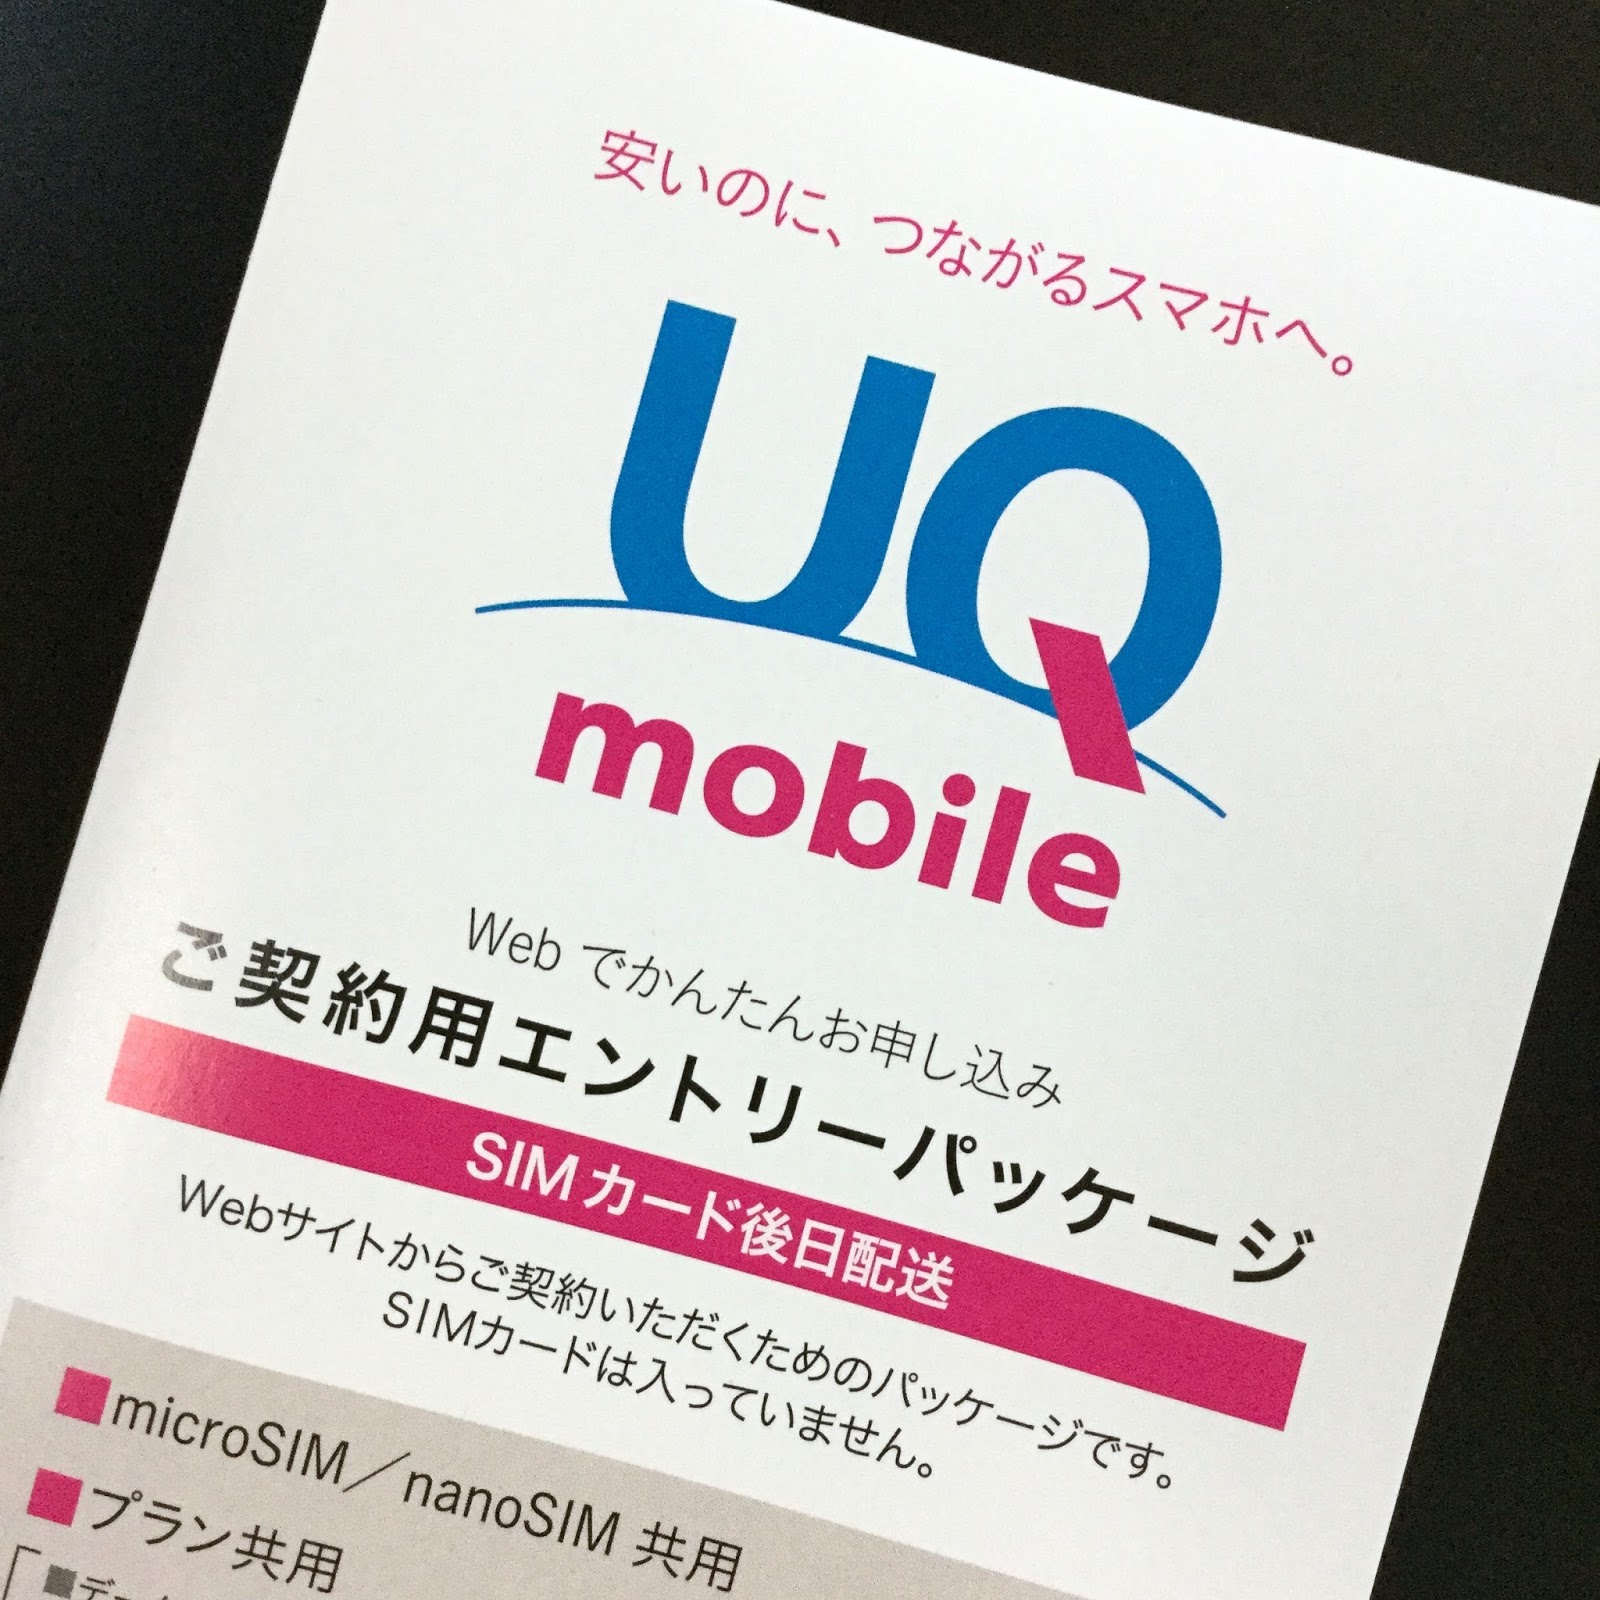 Au 版 Iphone 5s を Uq Mobile で使う時の設定方法 Webメモ帳